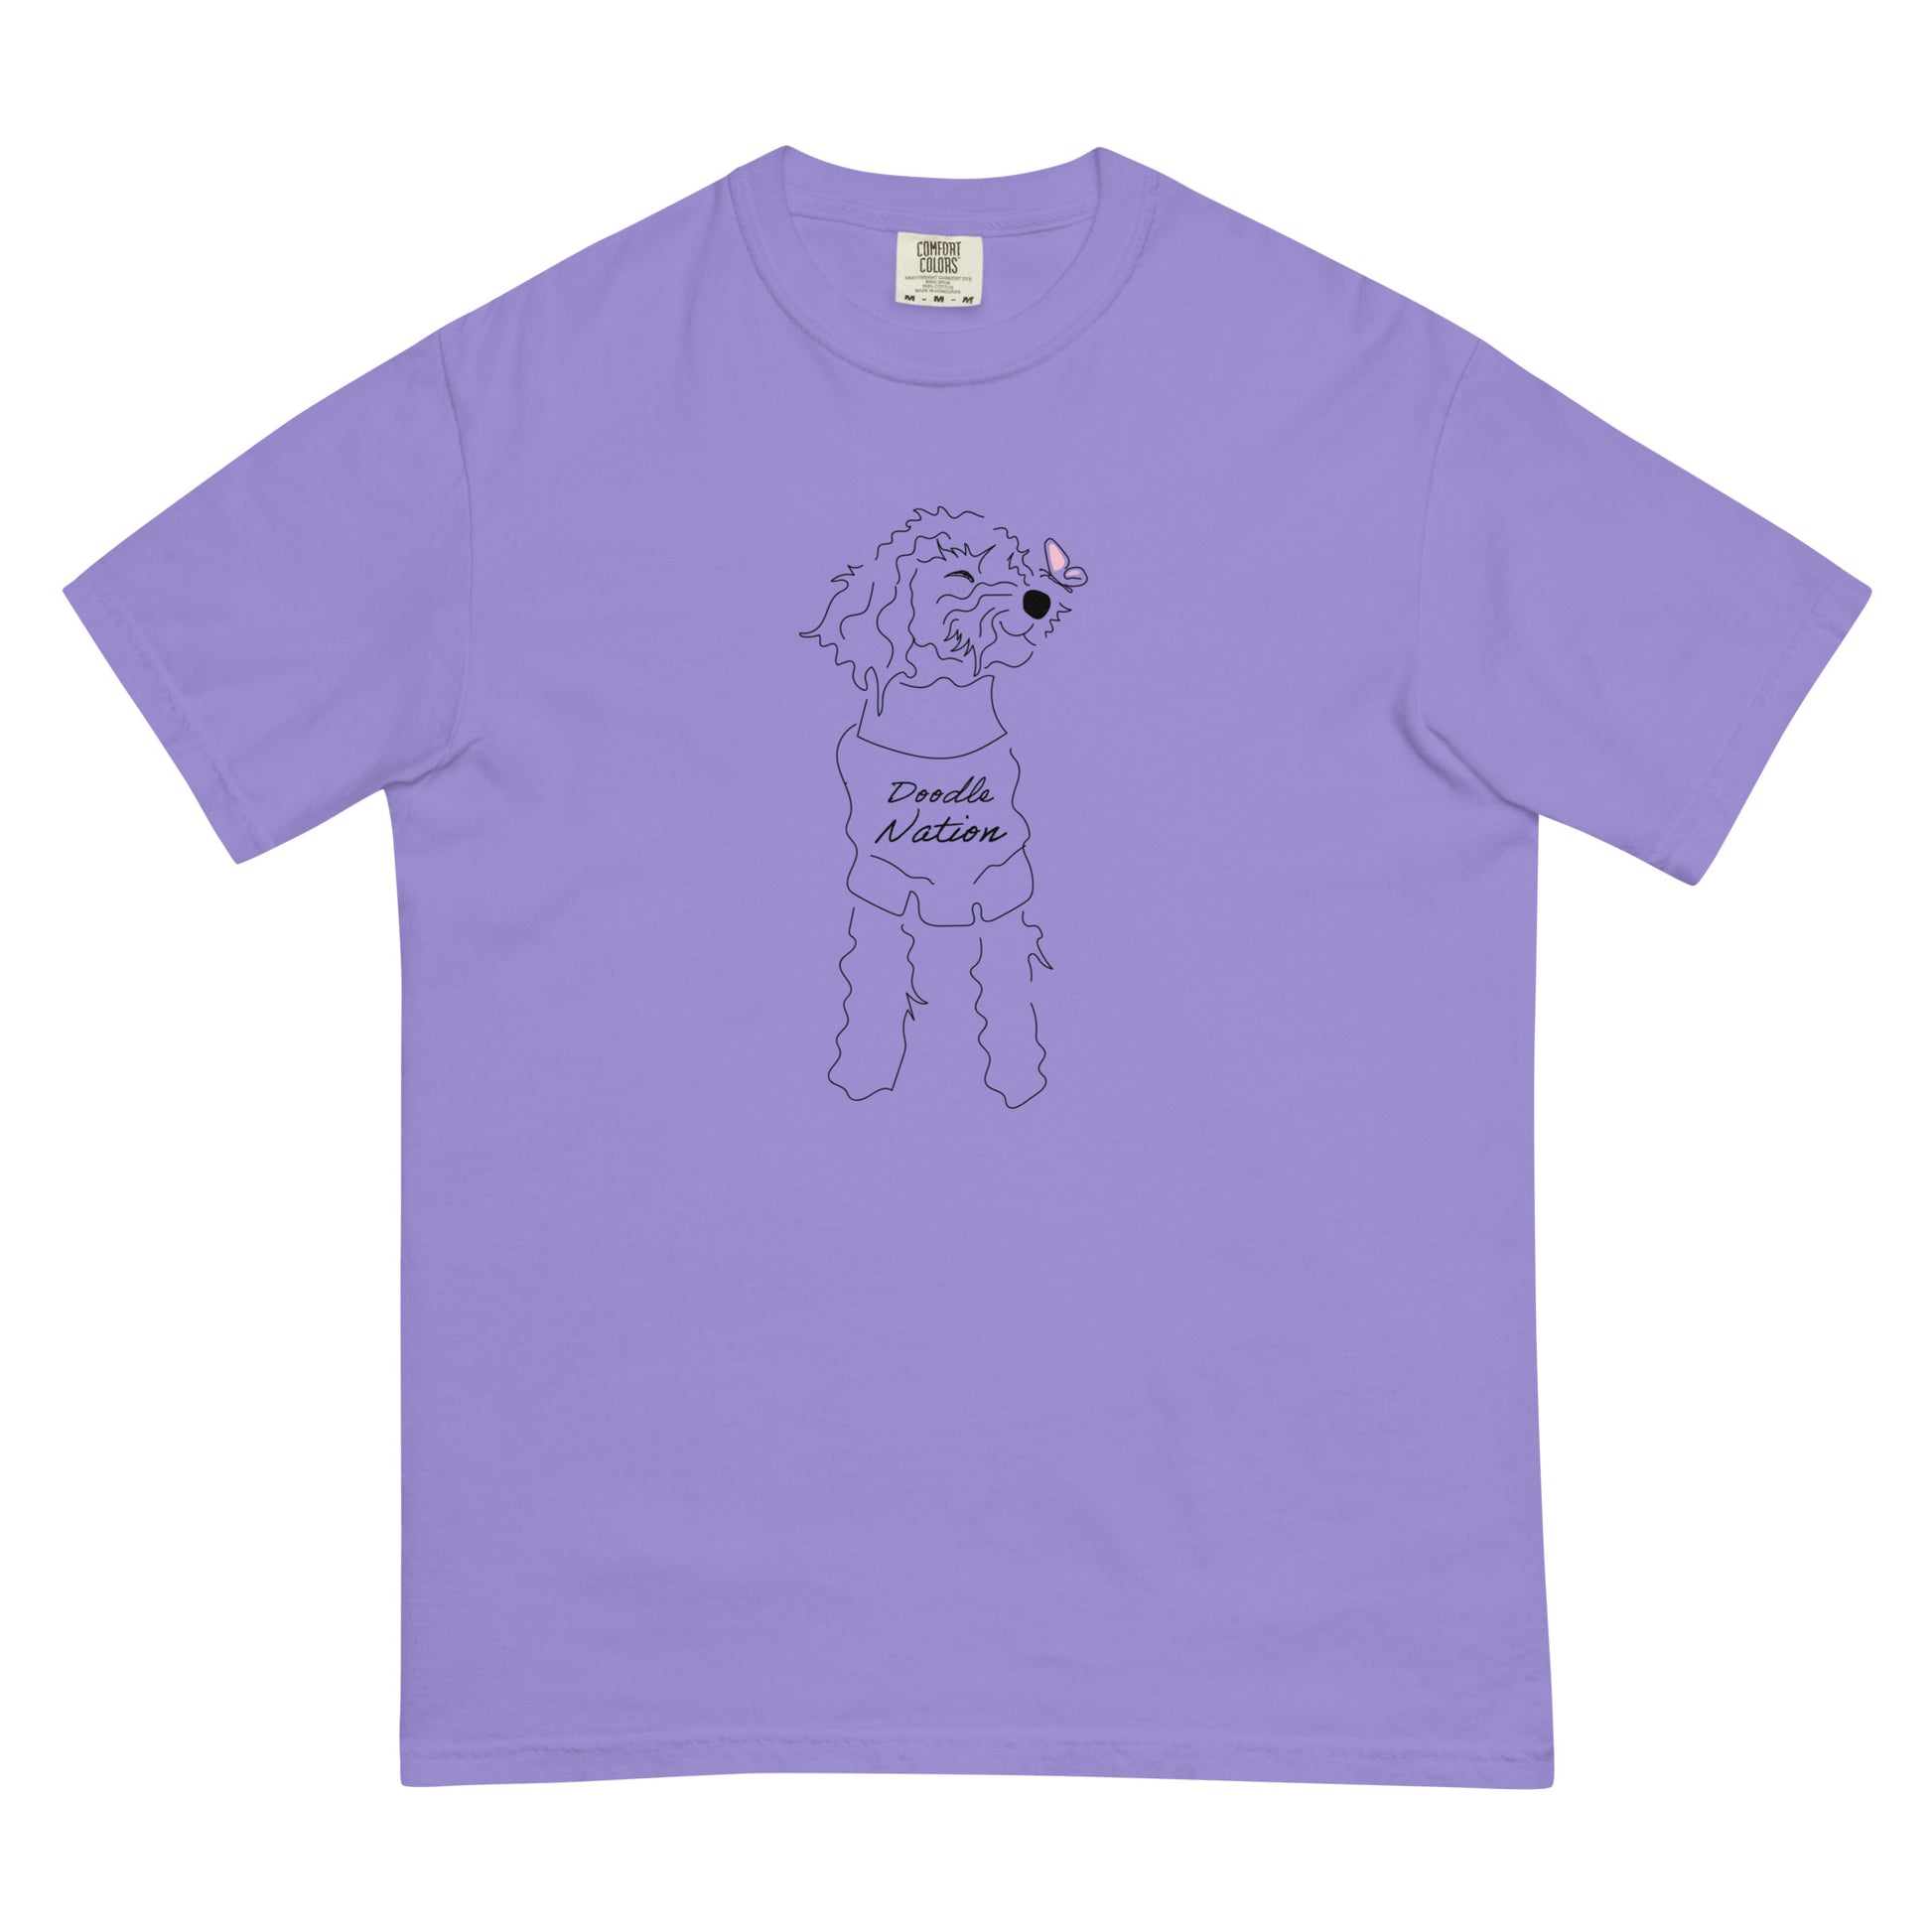 Goldendoodle comfort colors t-shirt with Goldendoodle dog and words "Doodle Nation" in violet color